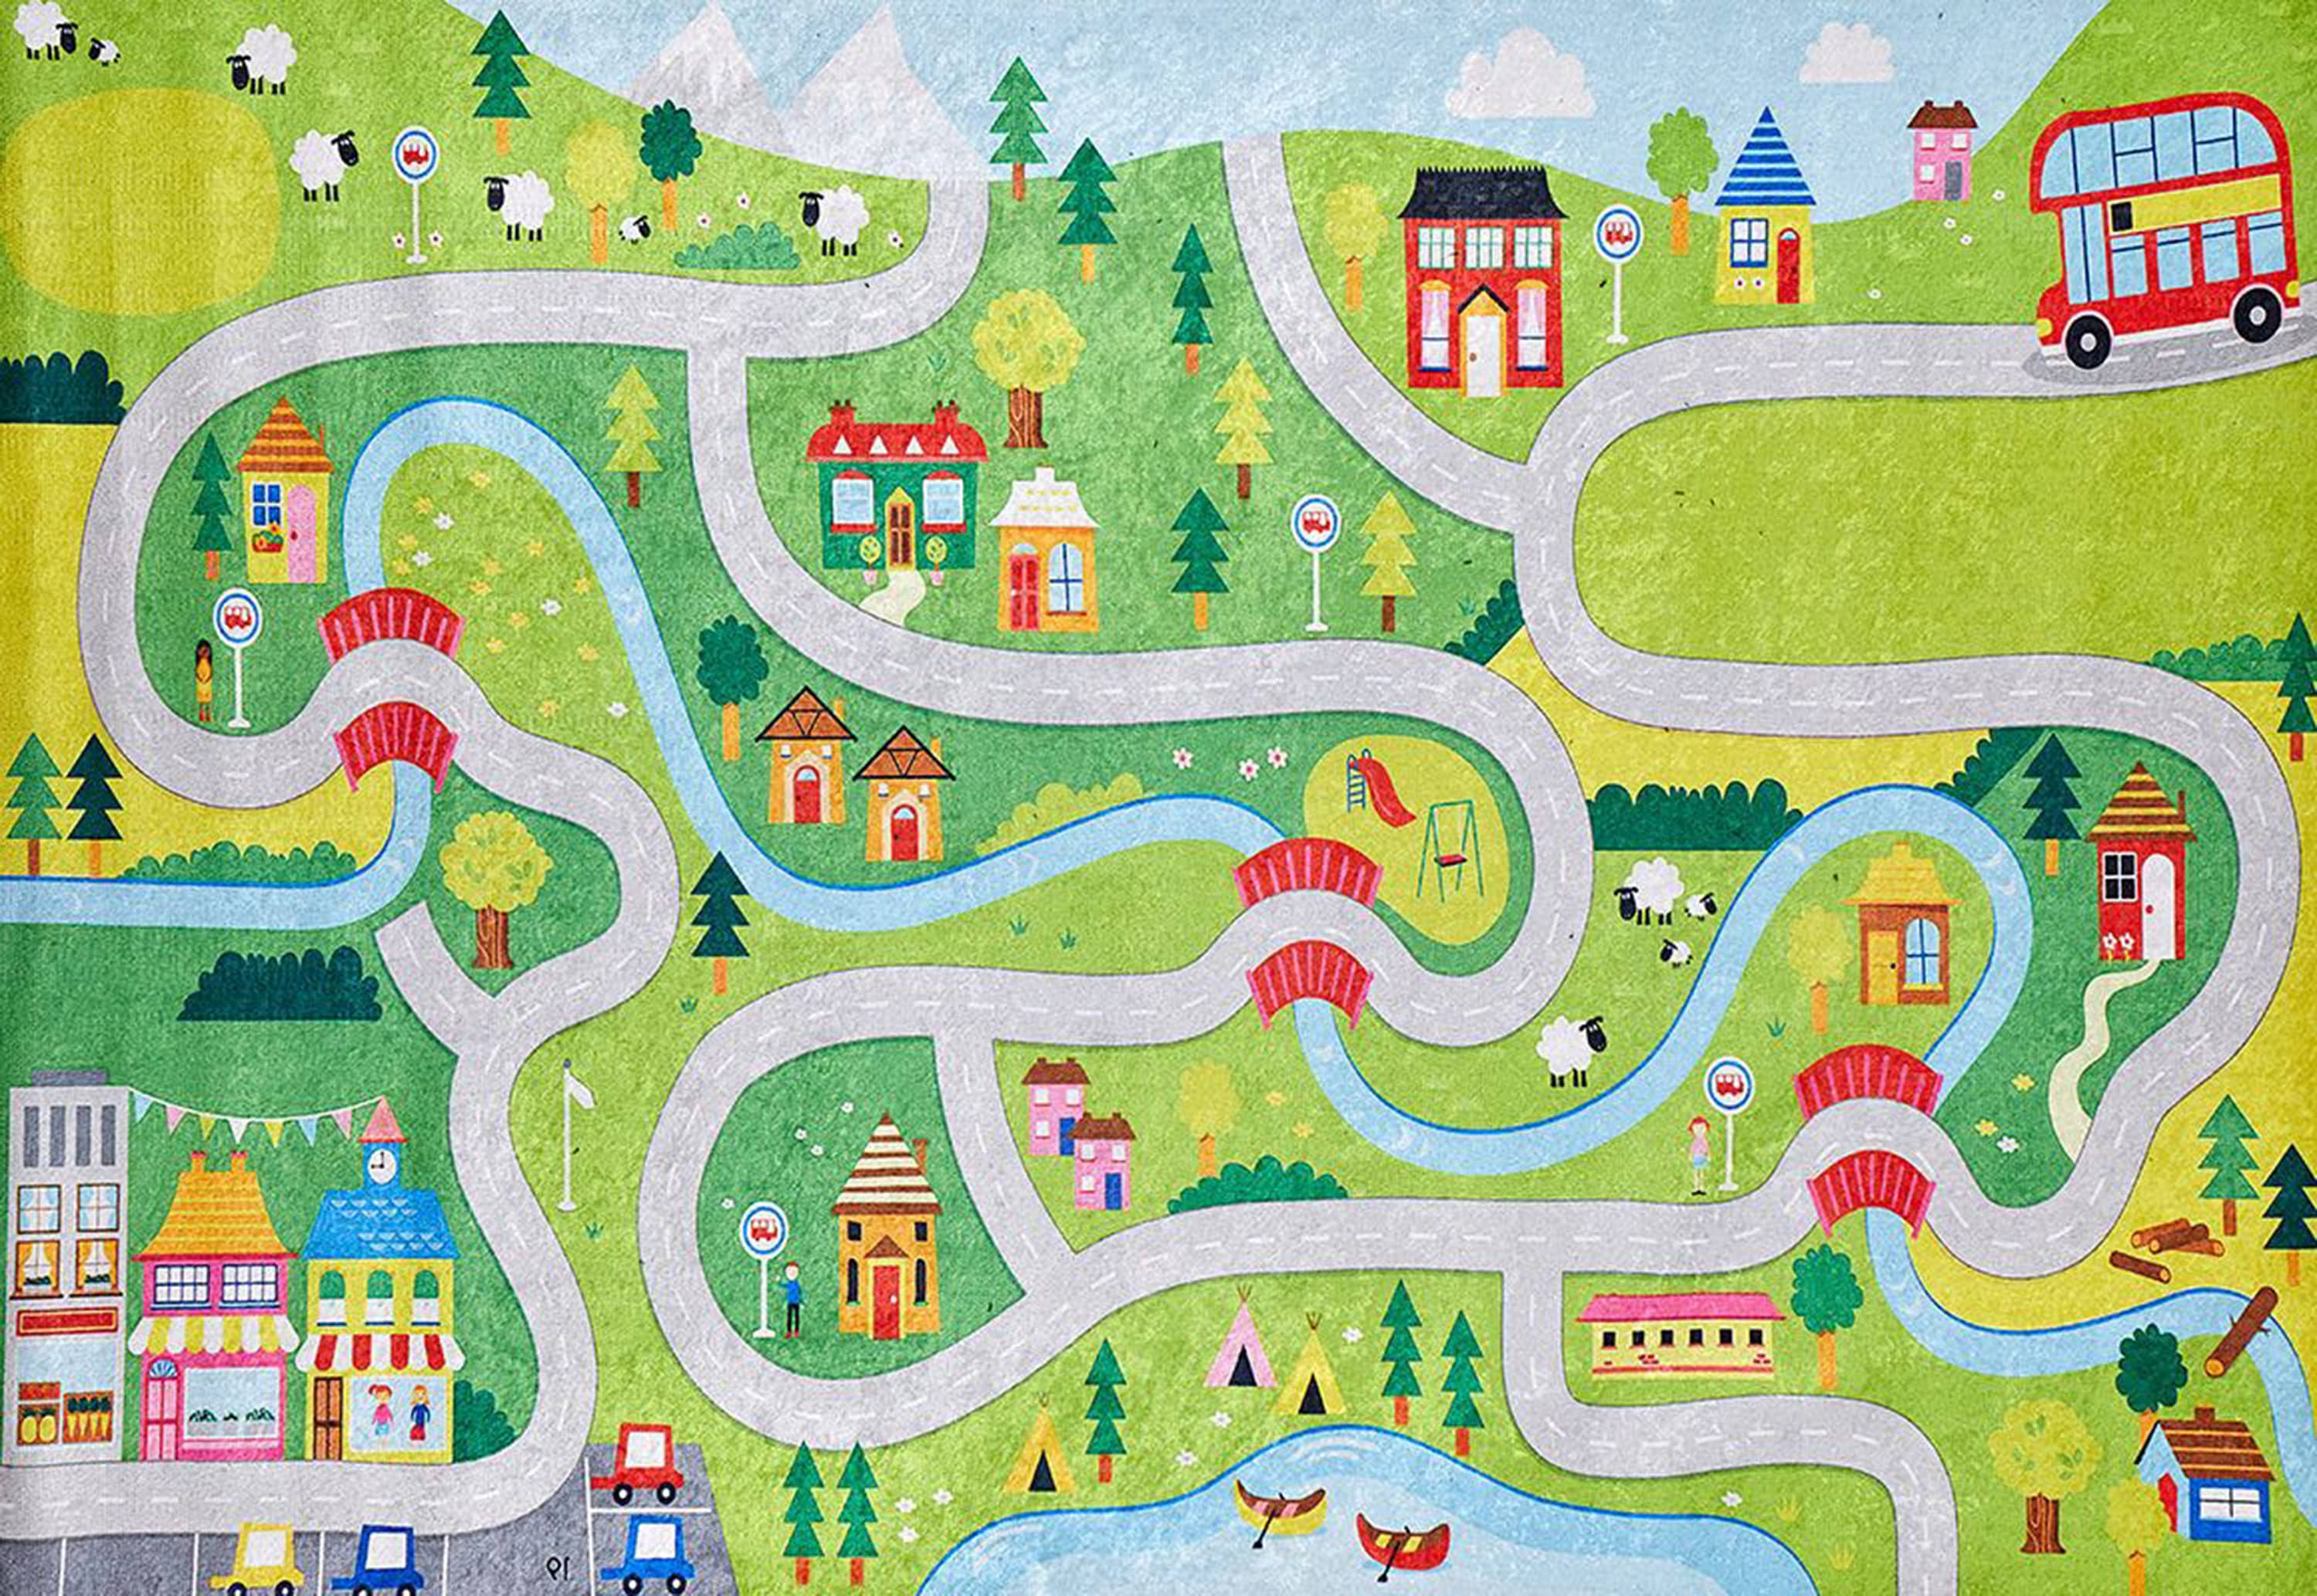 Alfombra de juego infantil Village City Roads Mapa Tren Pistas de Coches (8  pies x 10 pies)